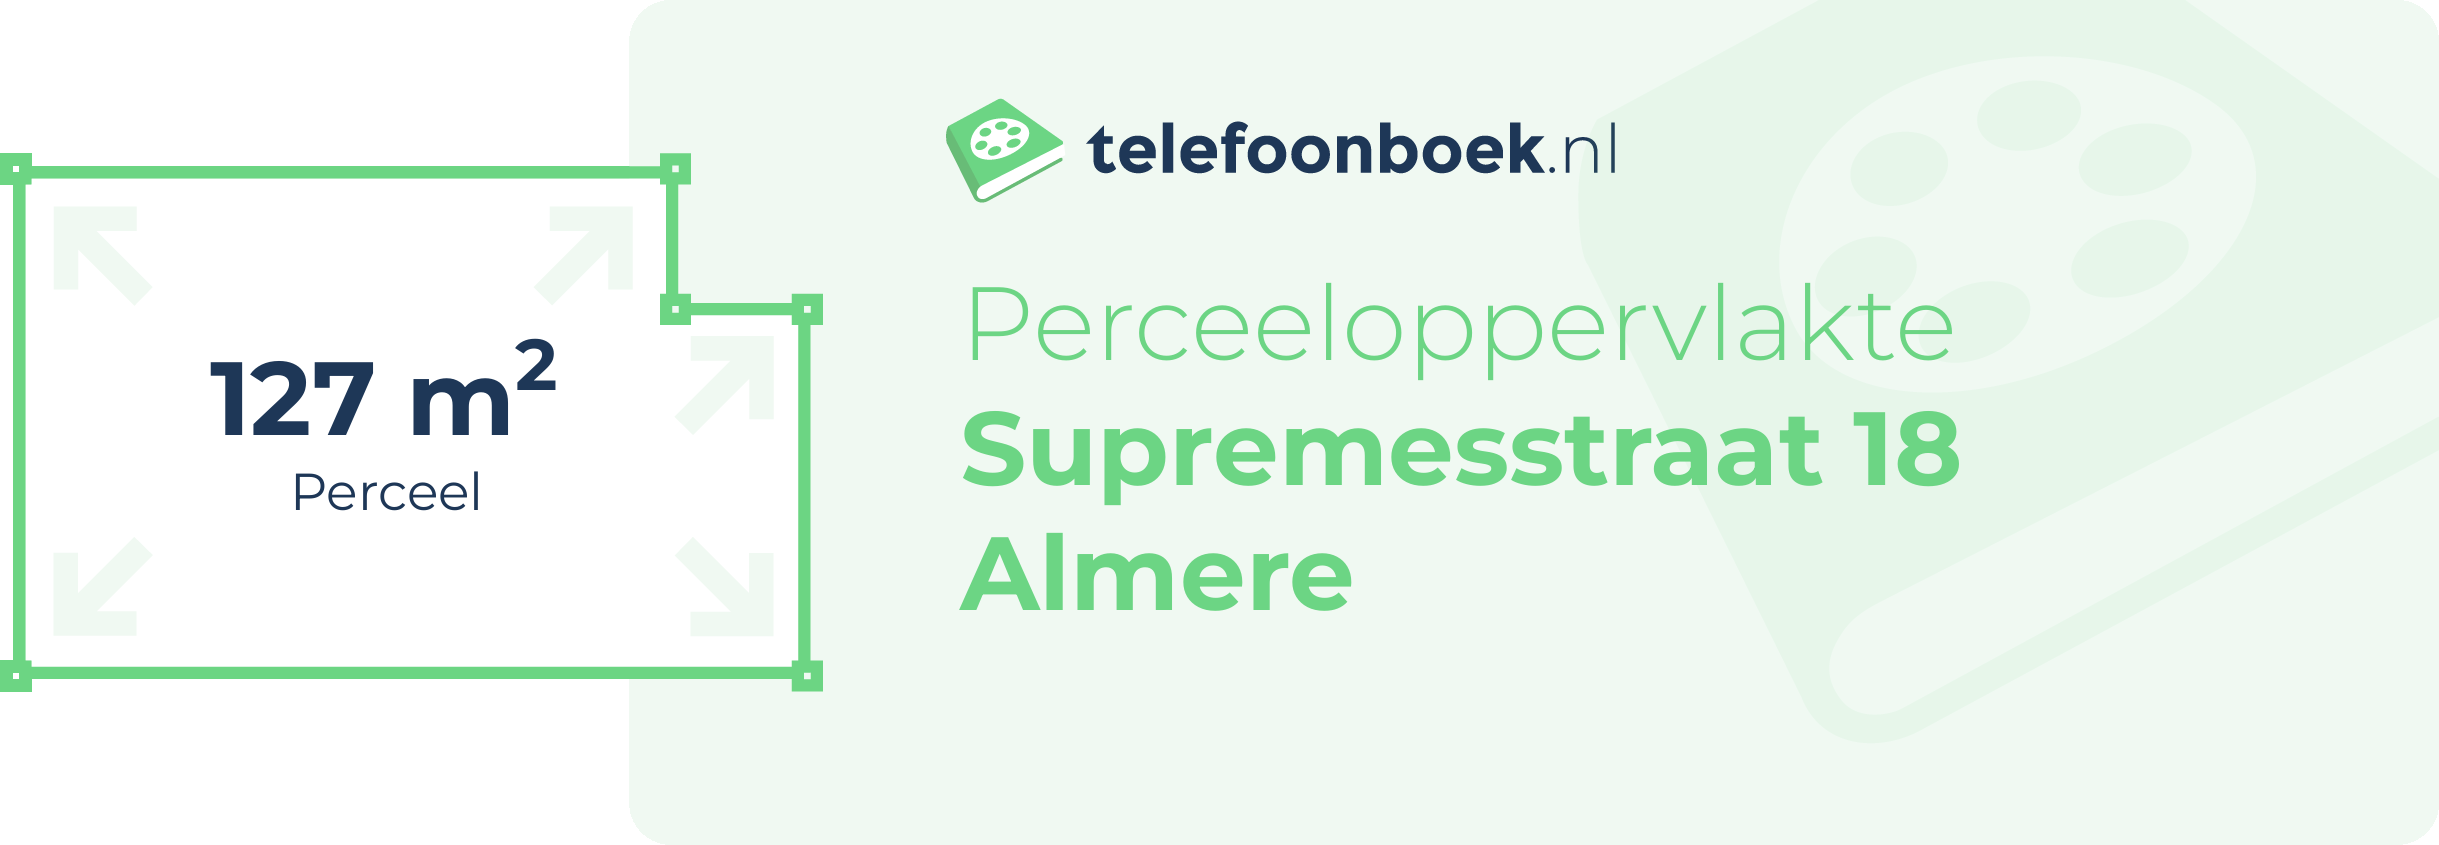 Perceeloppervlakte Supremesstraat 18 Almere